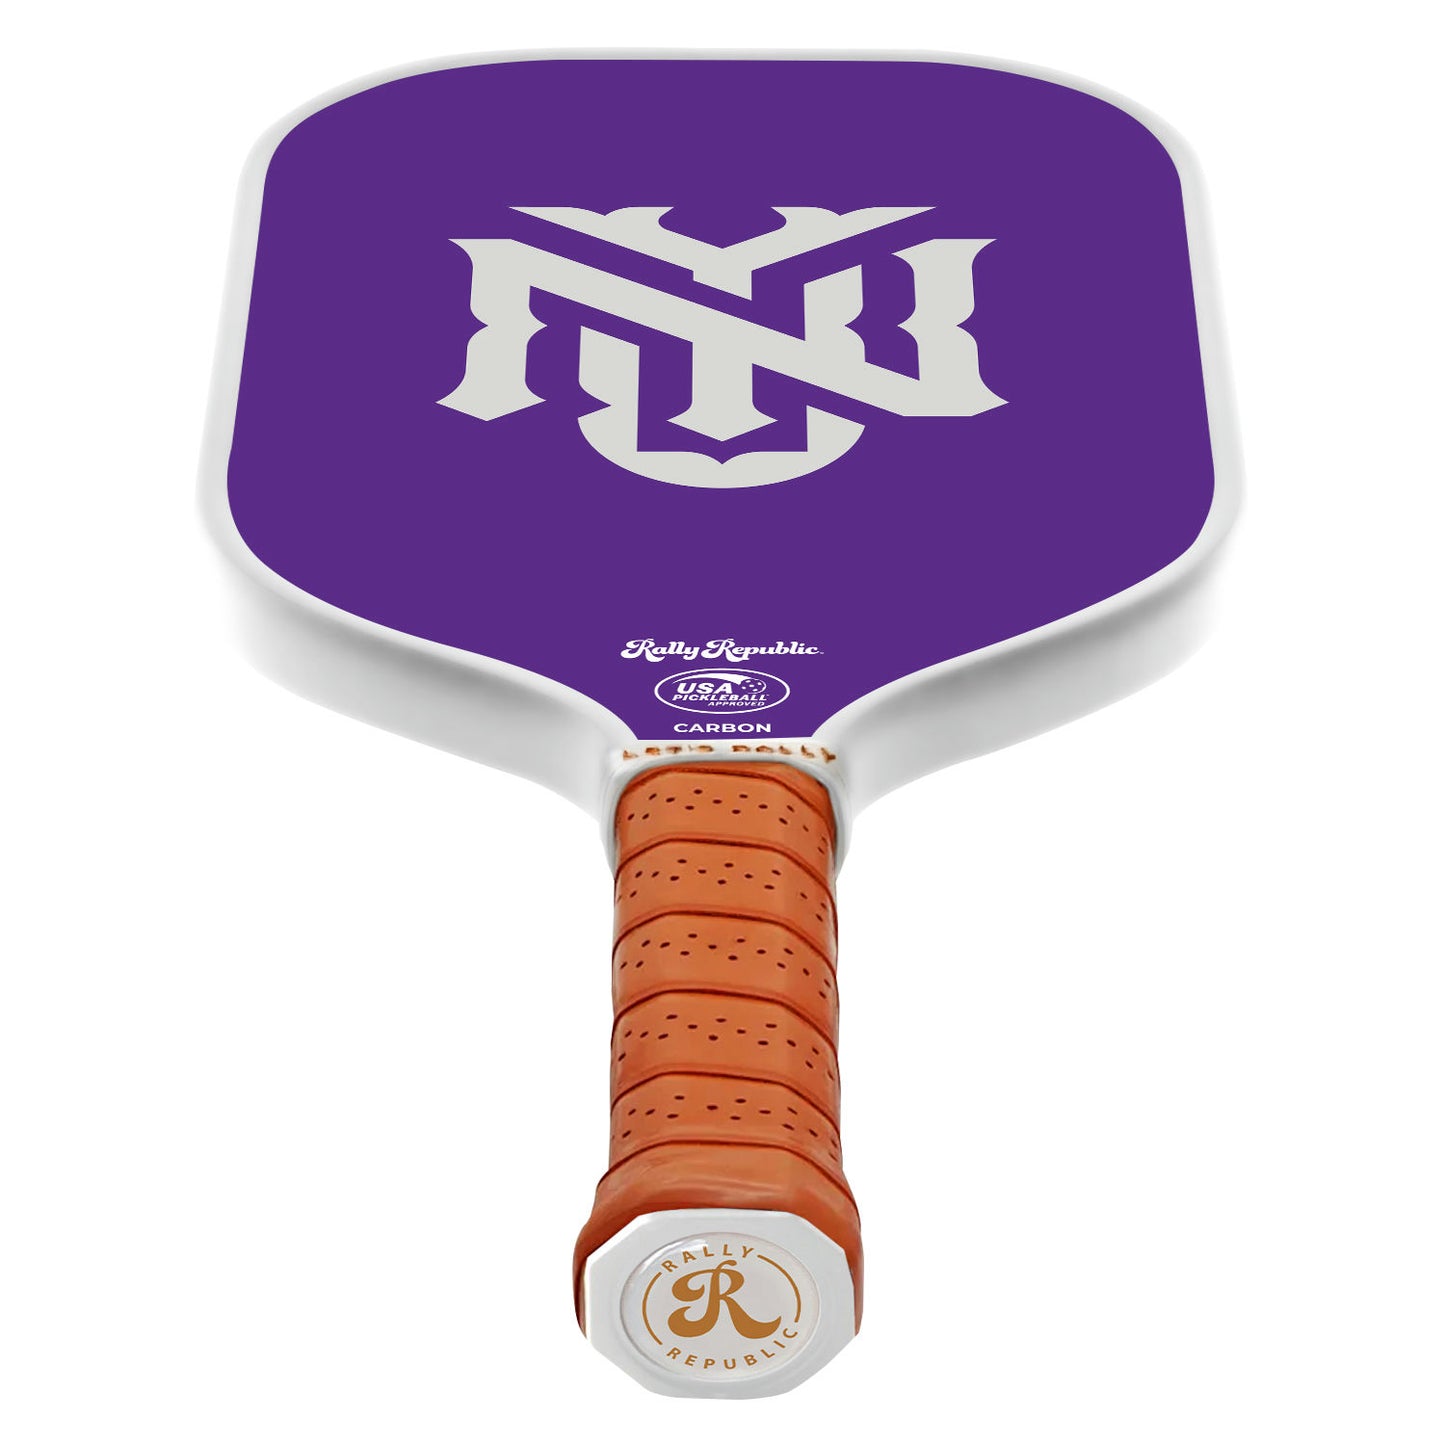 NYU Violets Purple NYU White Primary Athletic Mark Pickleball Paddle